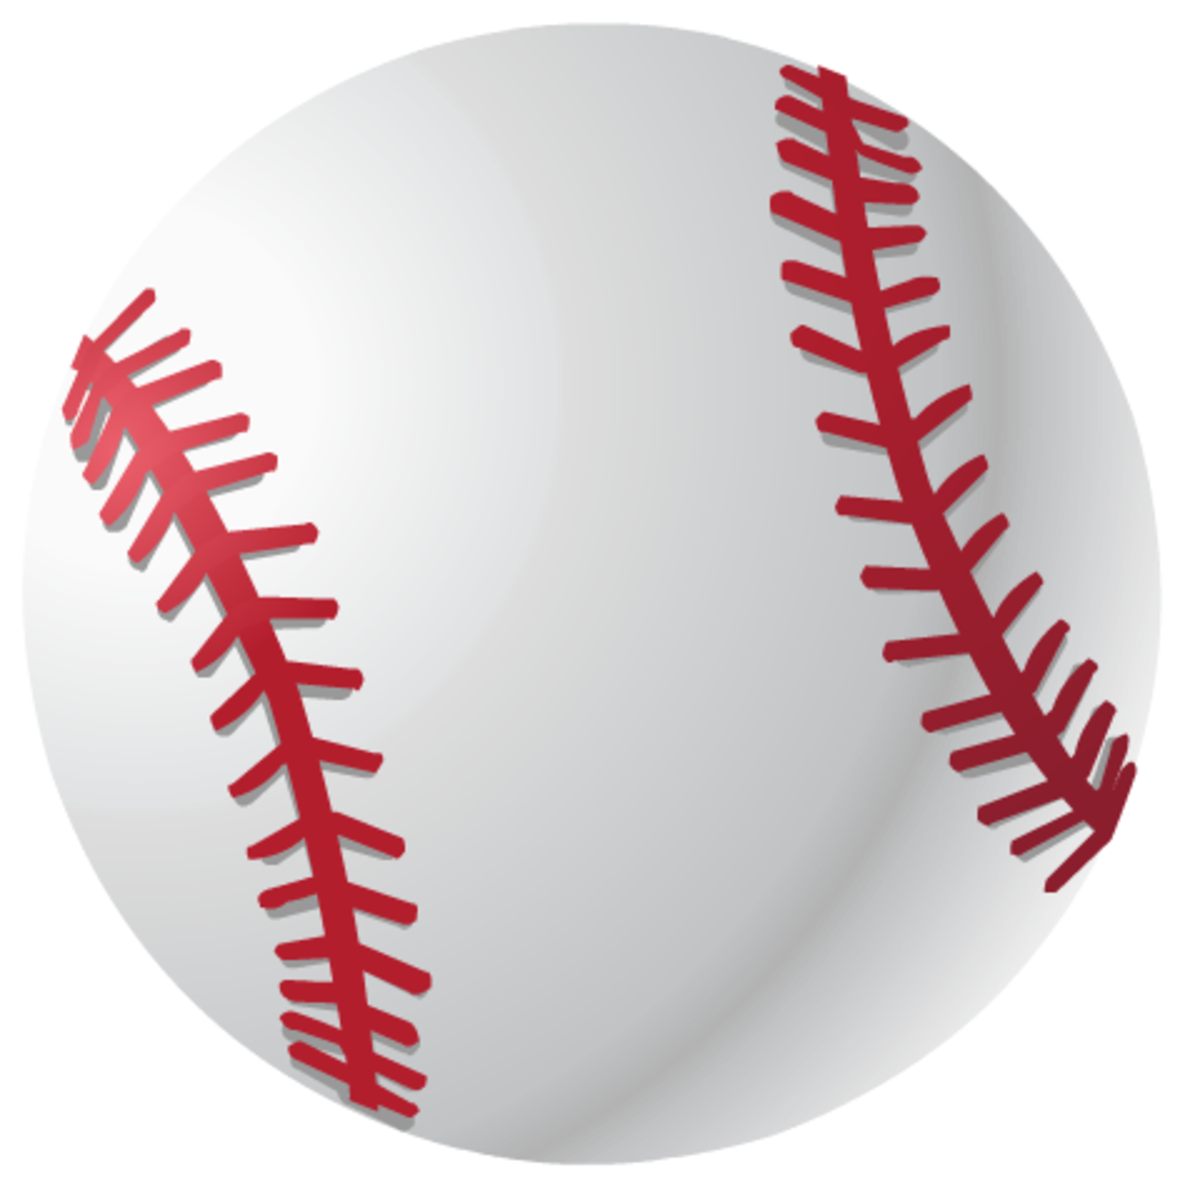 Free Softball and Baseball Clip Art HubPages